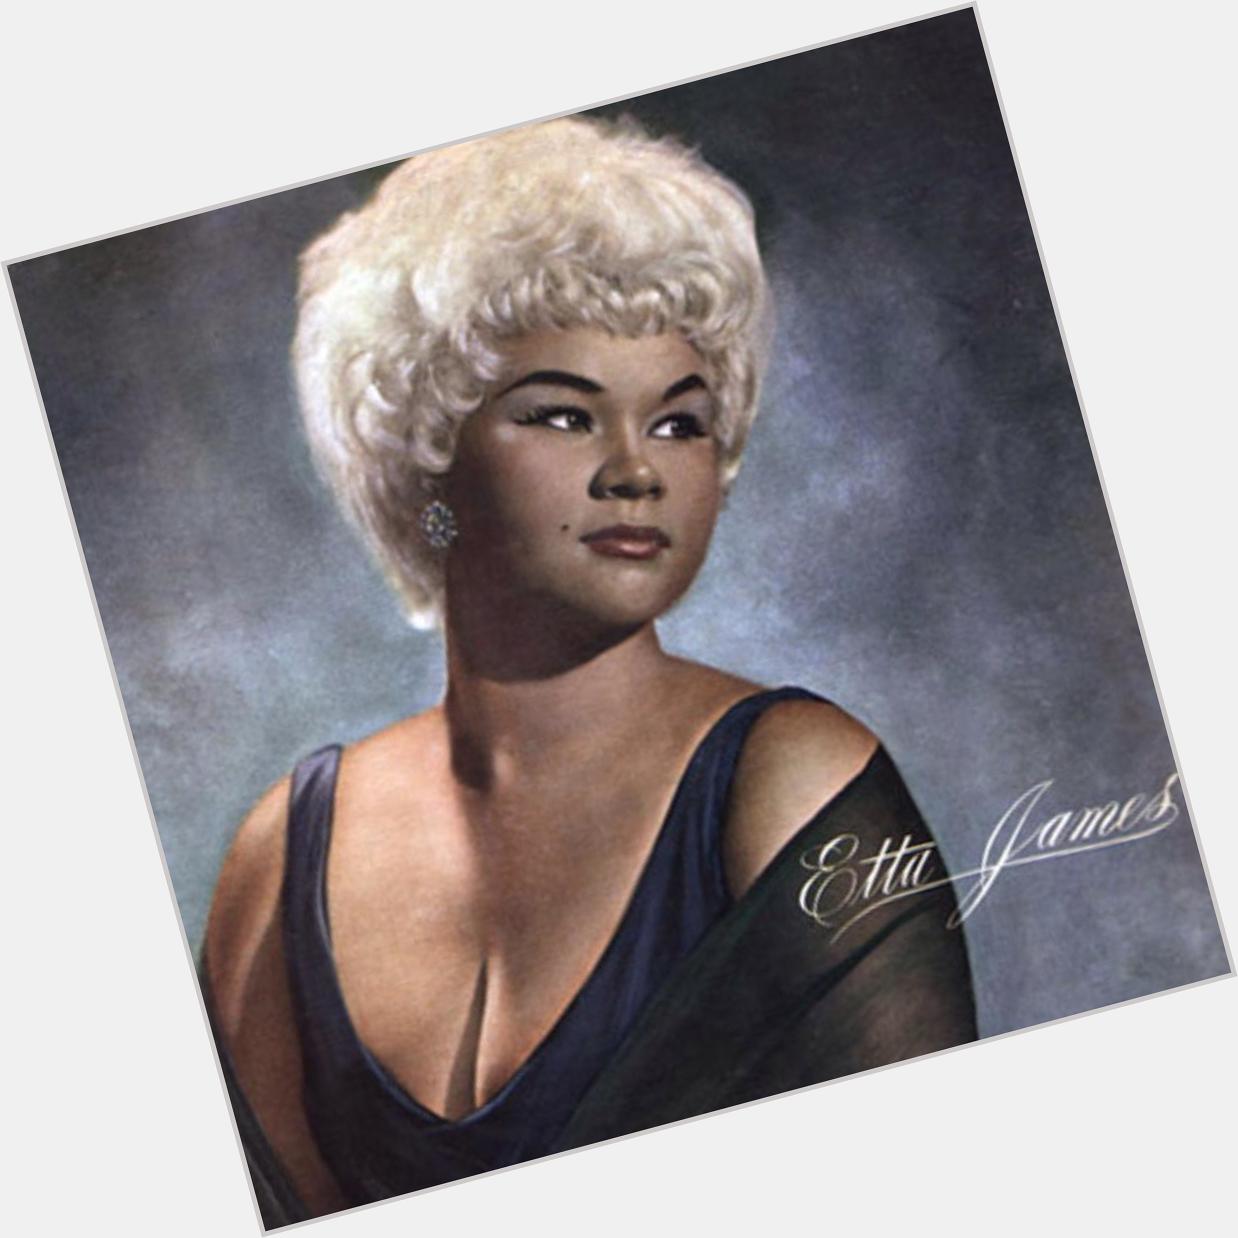 Happy birthday to the legendary Ms. Etta James. RIP 